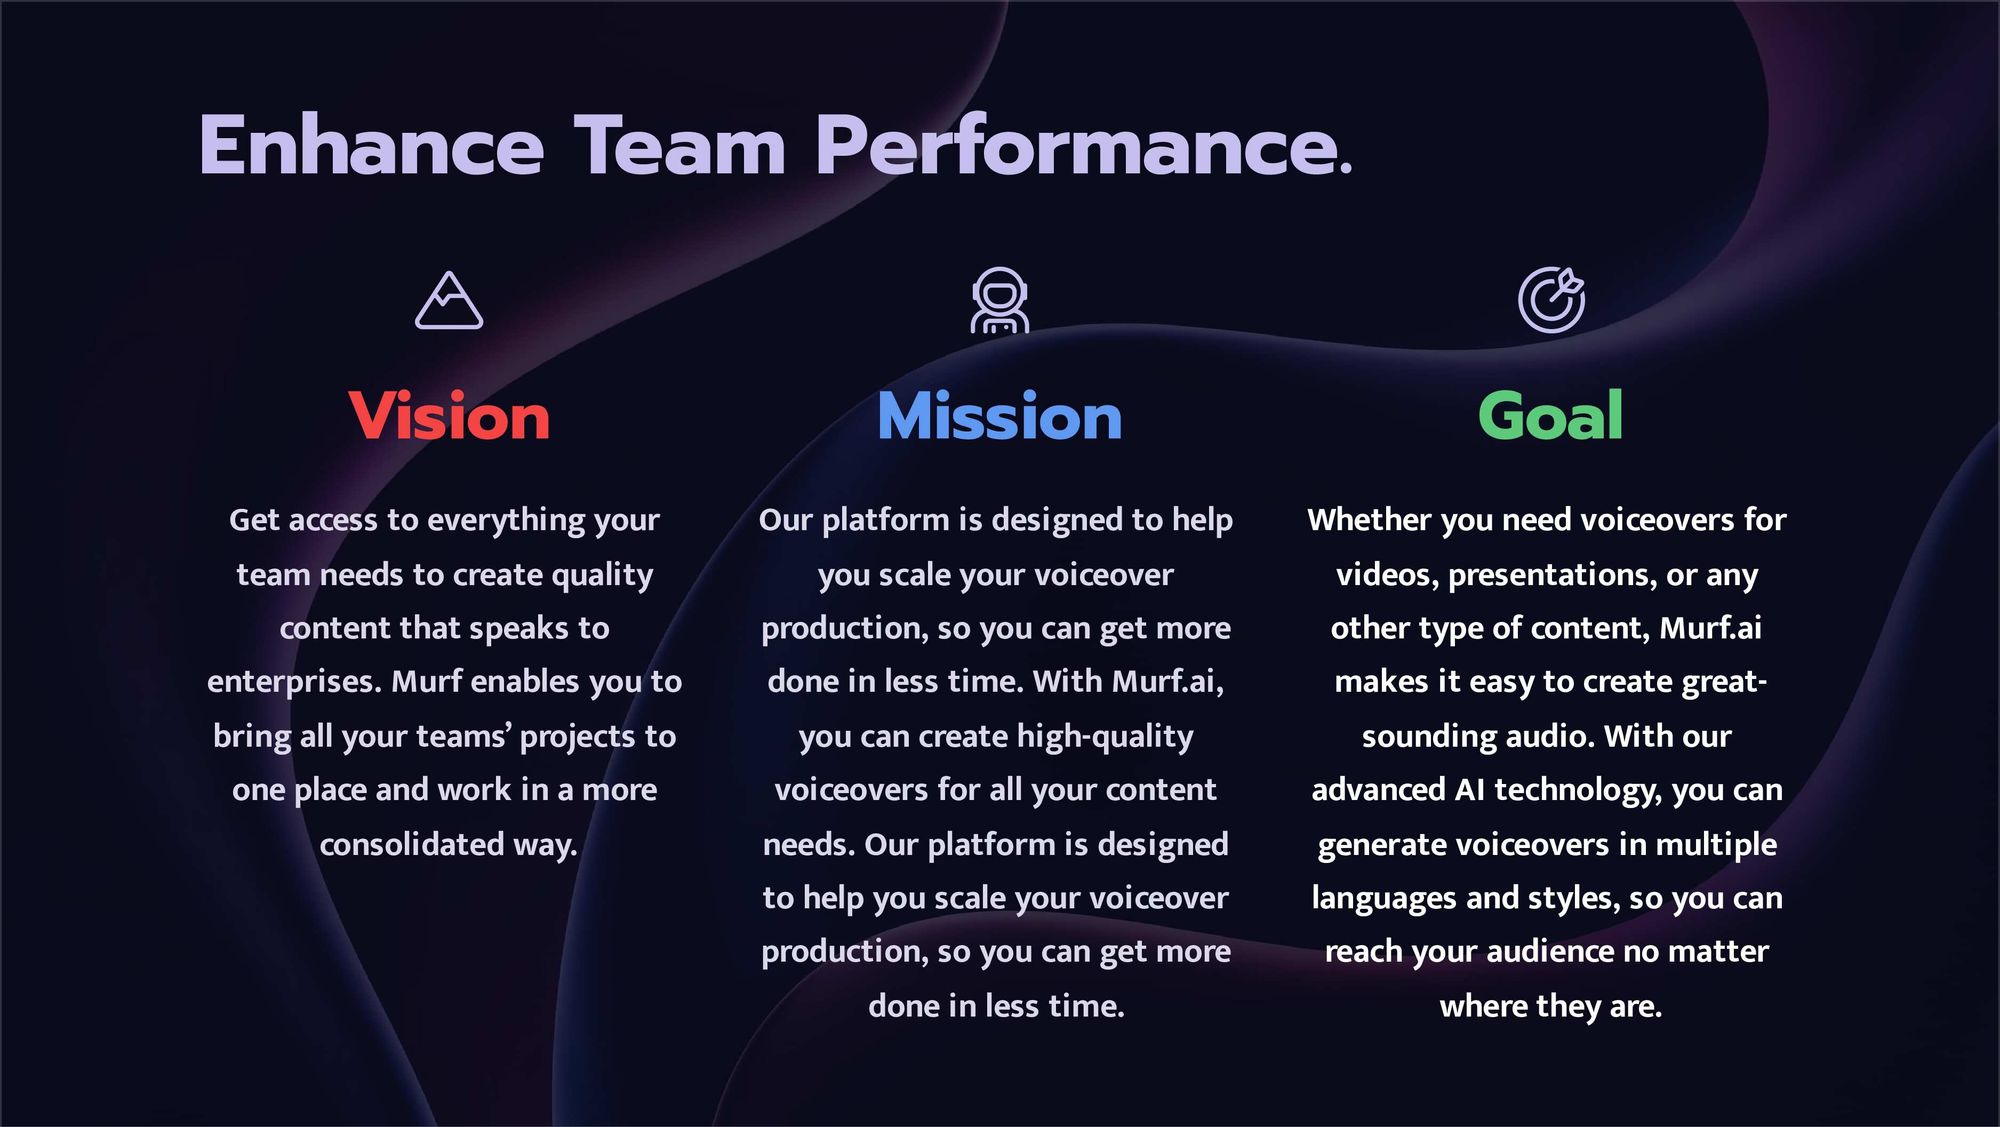 Enhance Team Performance create quality content that speaks to enterprises